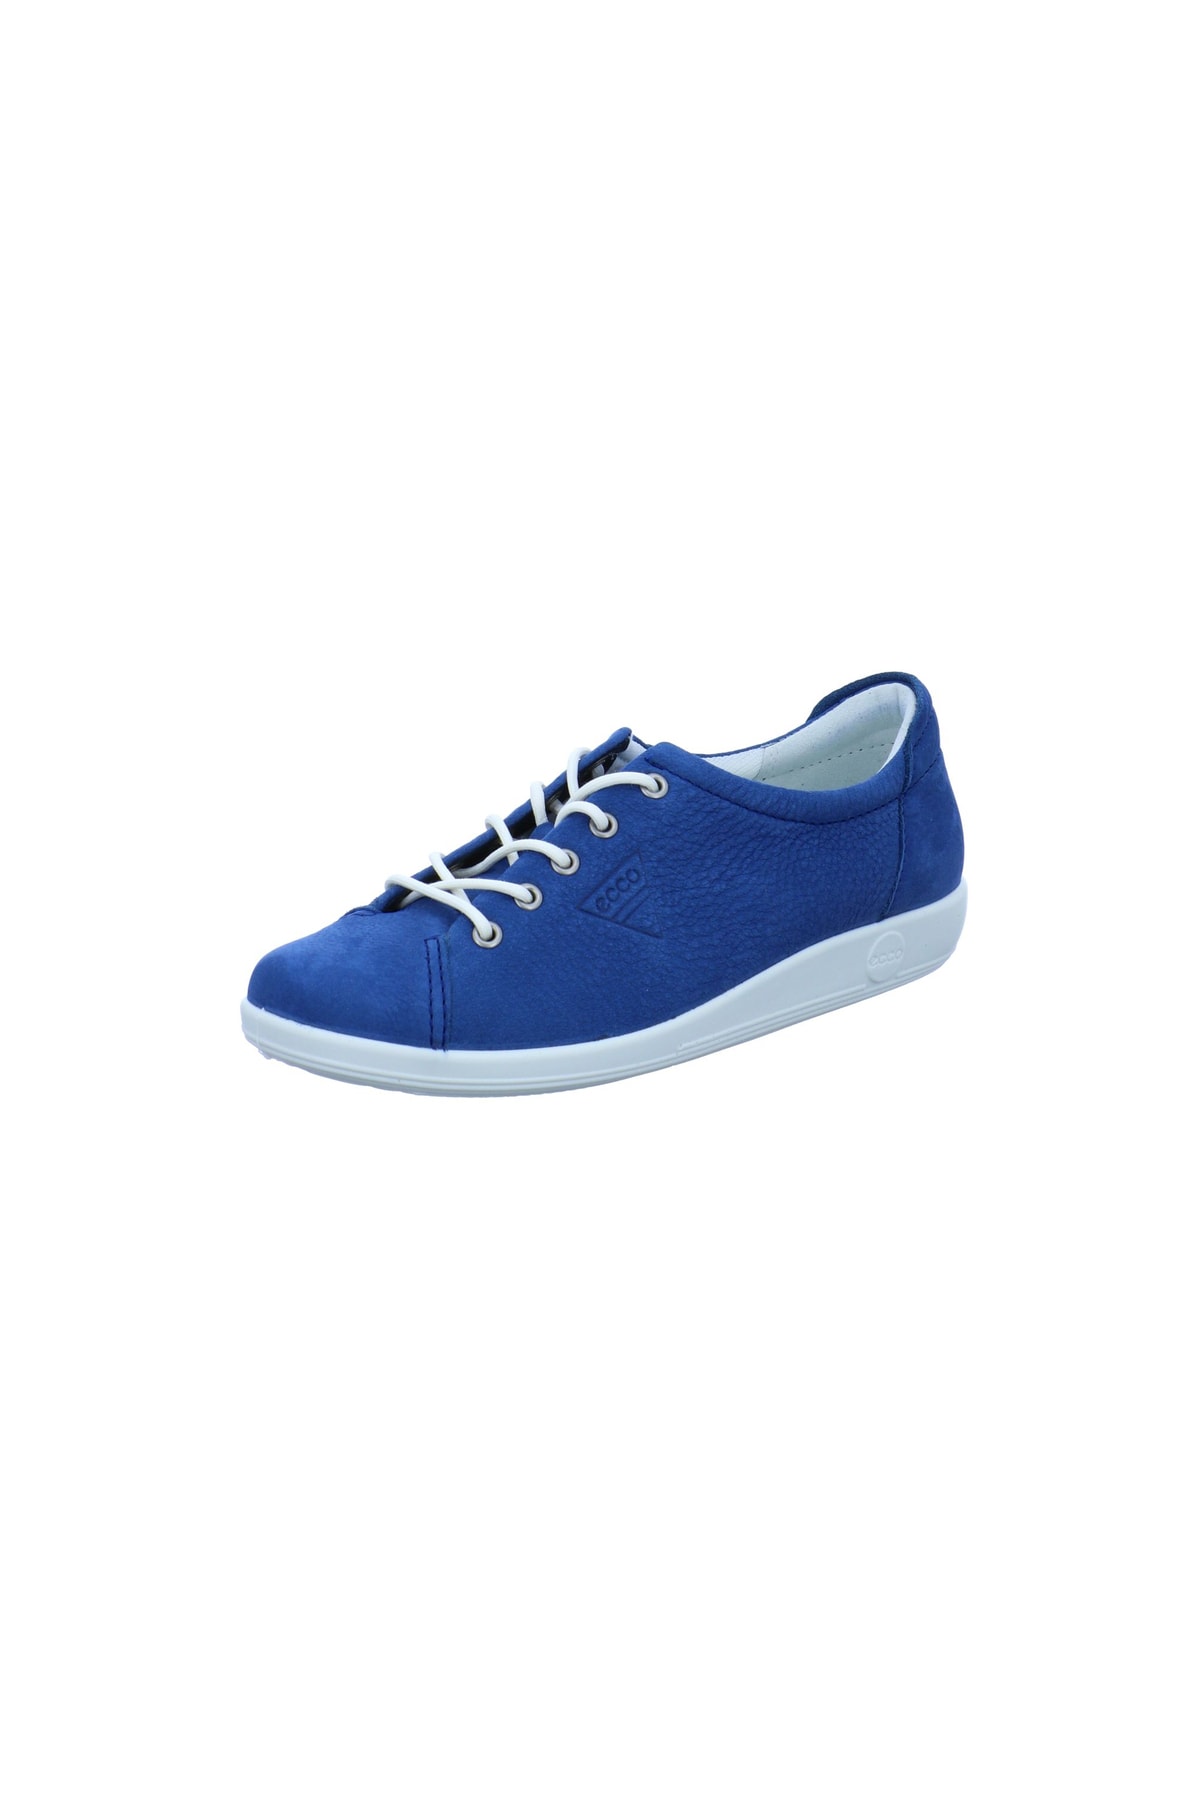 Ecco Sneaker Blau Flacher Absatz Fast ausverkauft